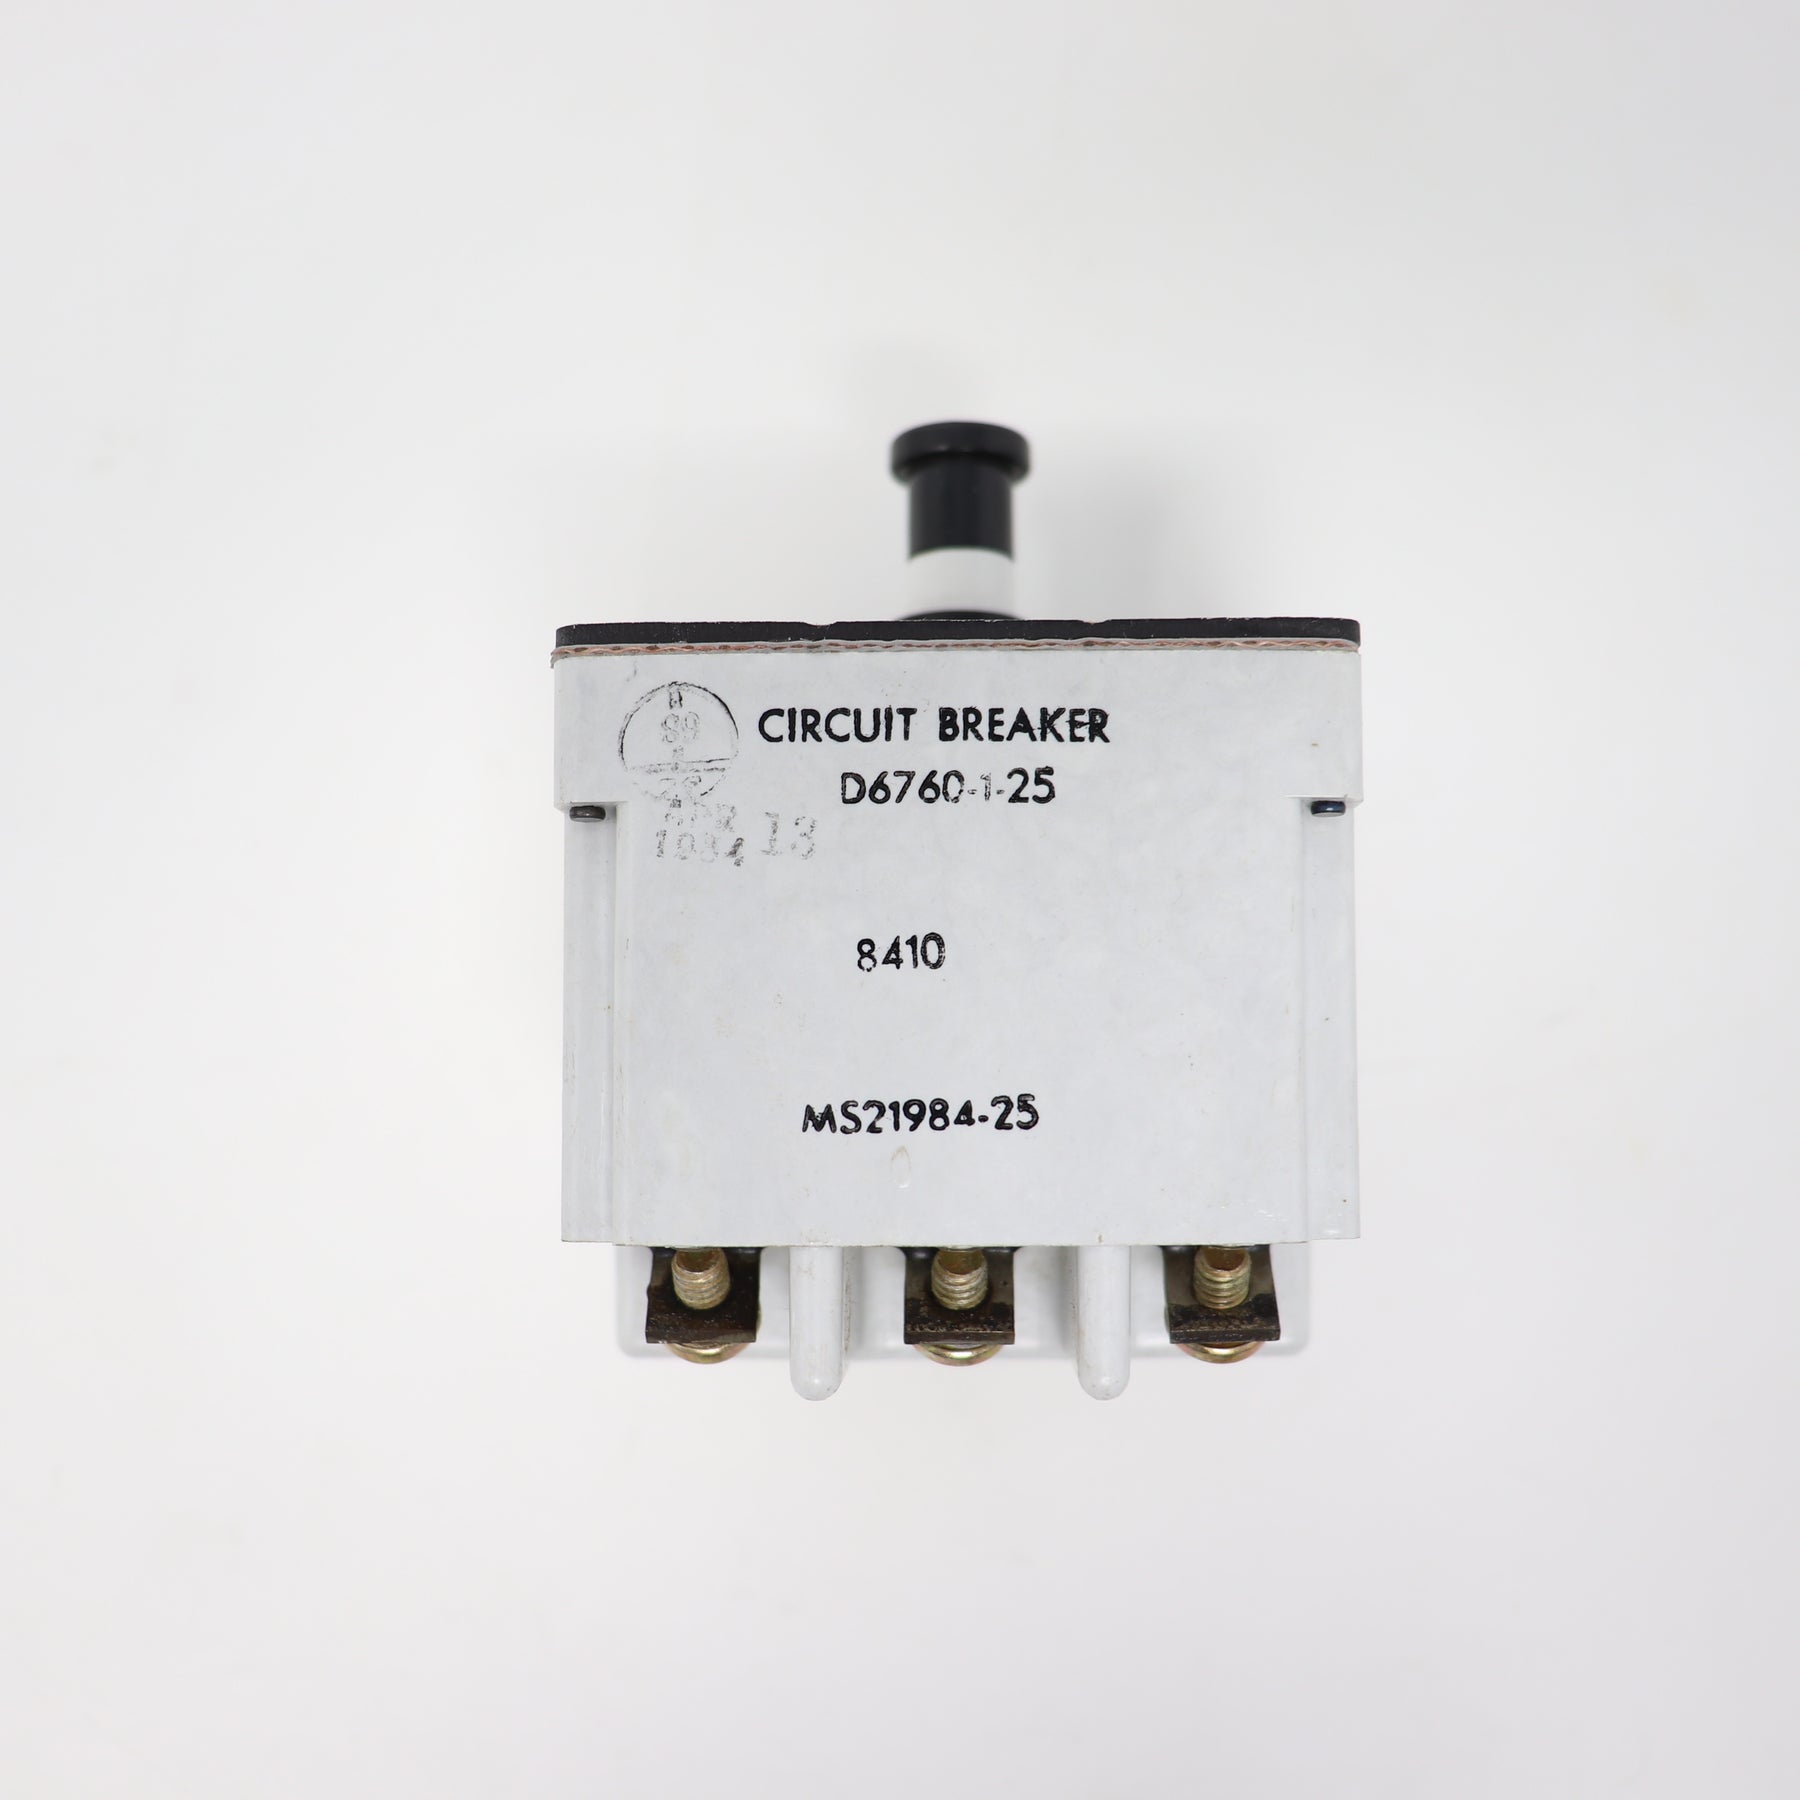 Klixon 25 amp 3 Pole Circuit Breaker D6760-1-25 MS21984-25